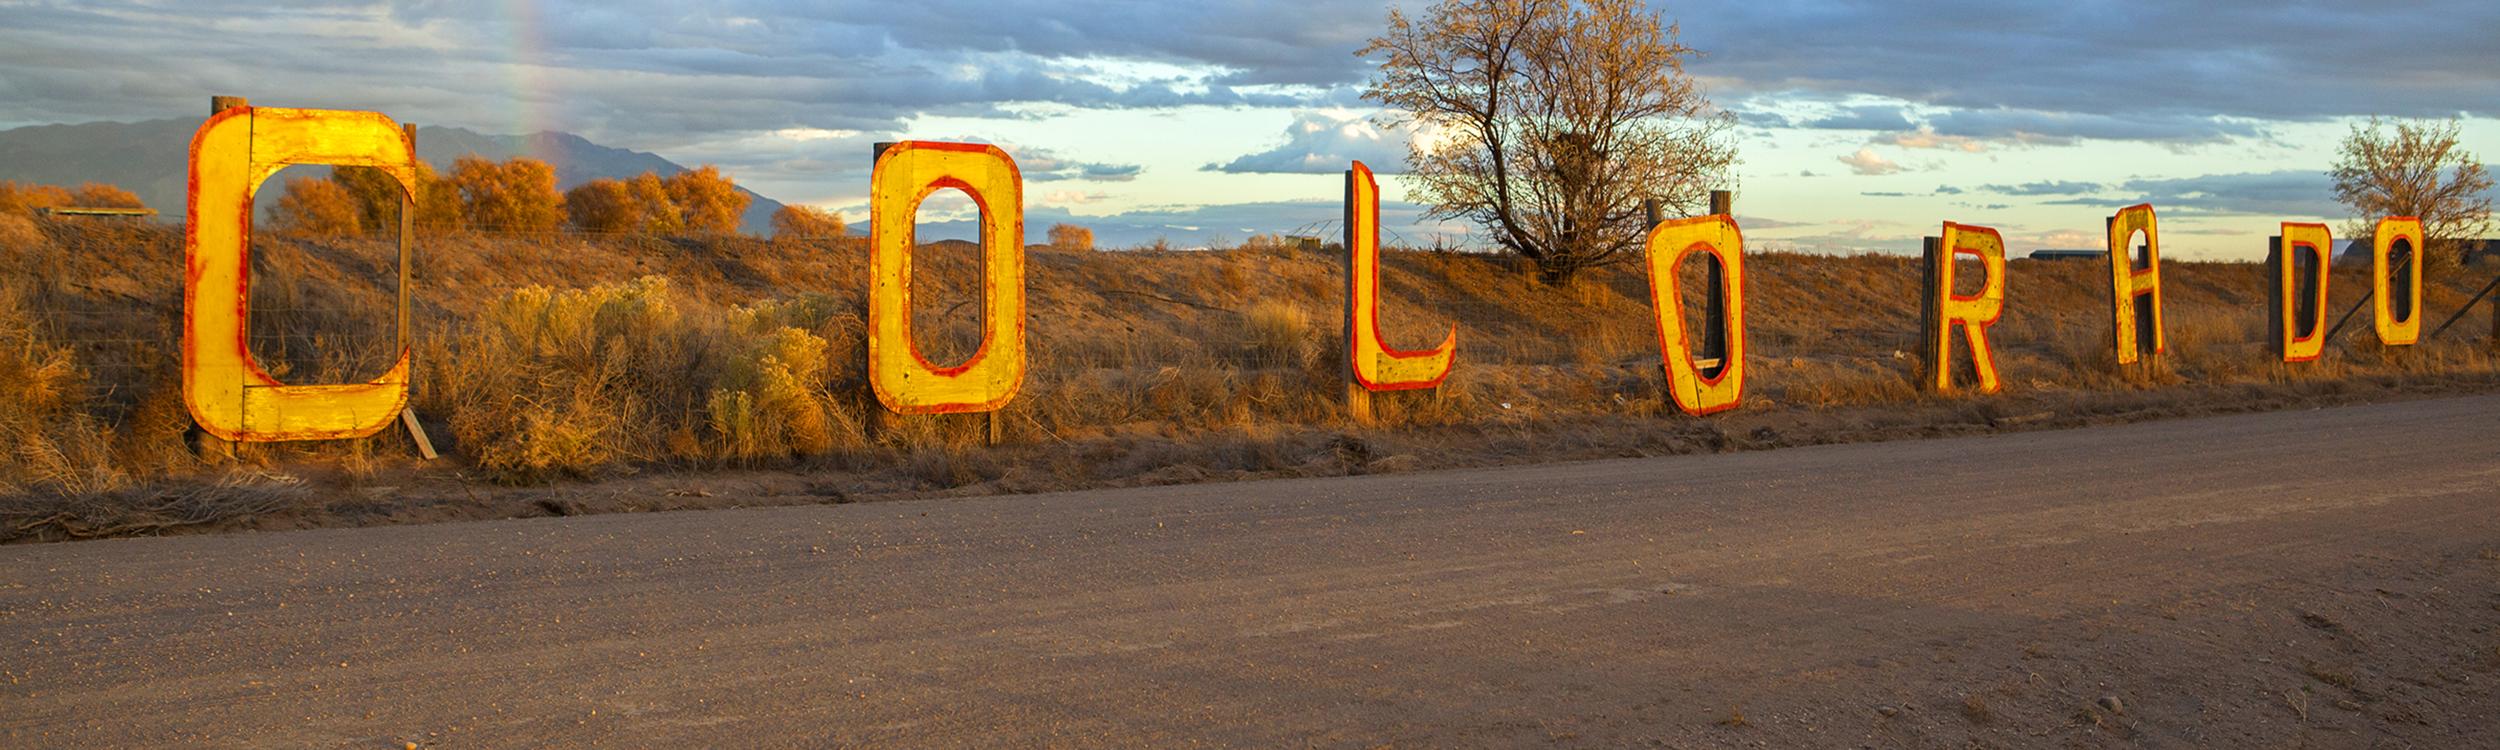 Colorado sign against scenic backdrop